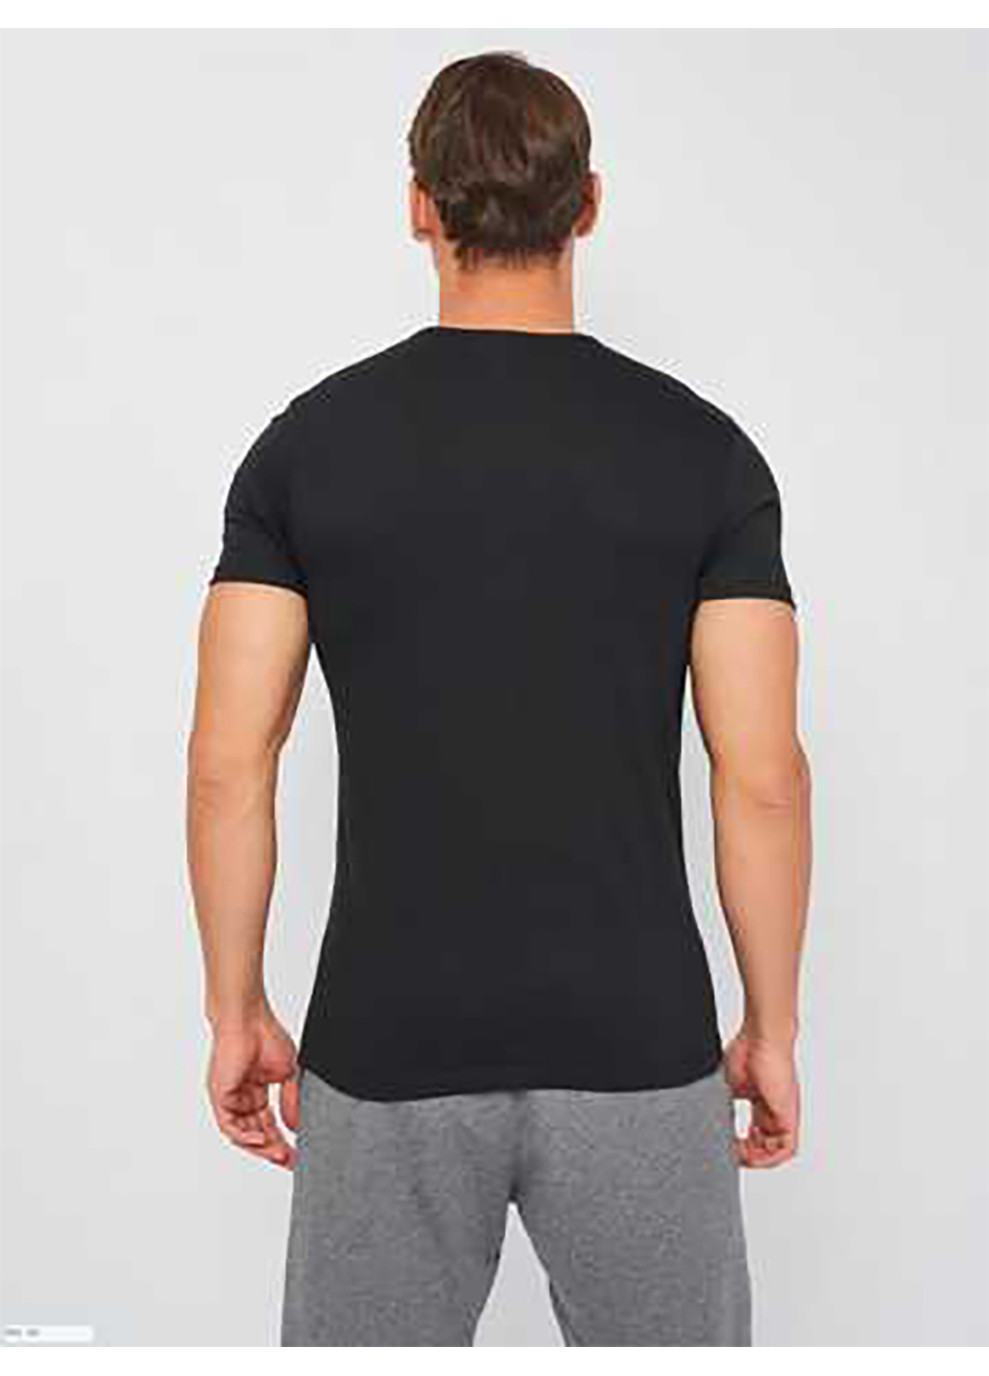 Черная футболка t-shirt mezza manica girocollo con stampa logo petto черный xl муж k1335 nero-xl Kappa